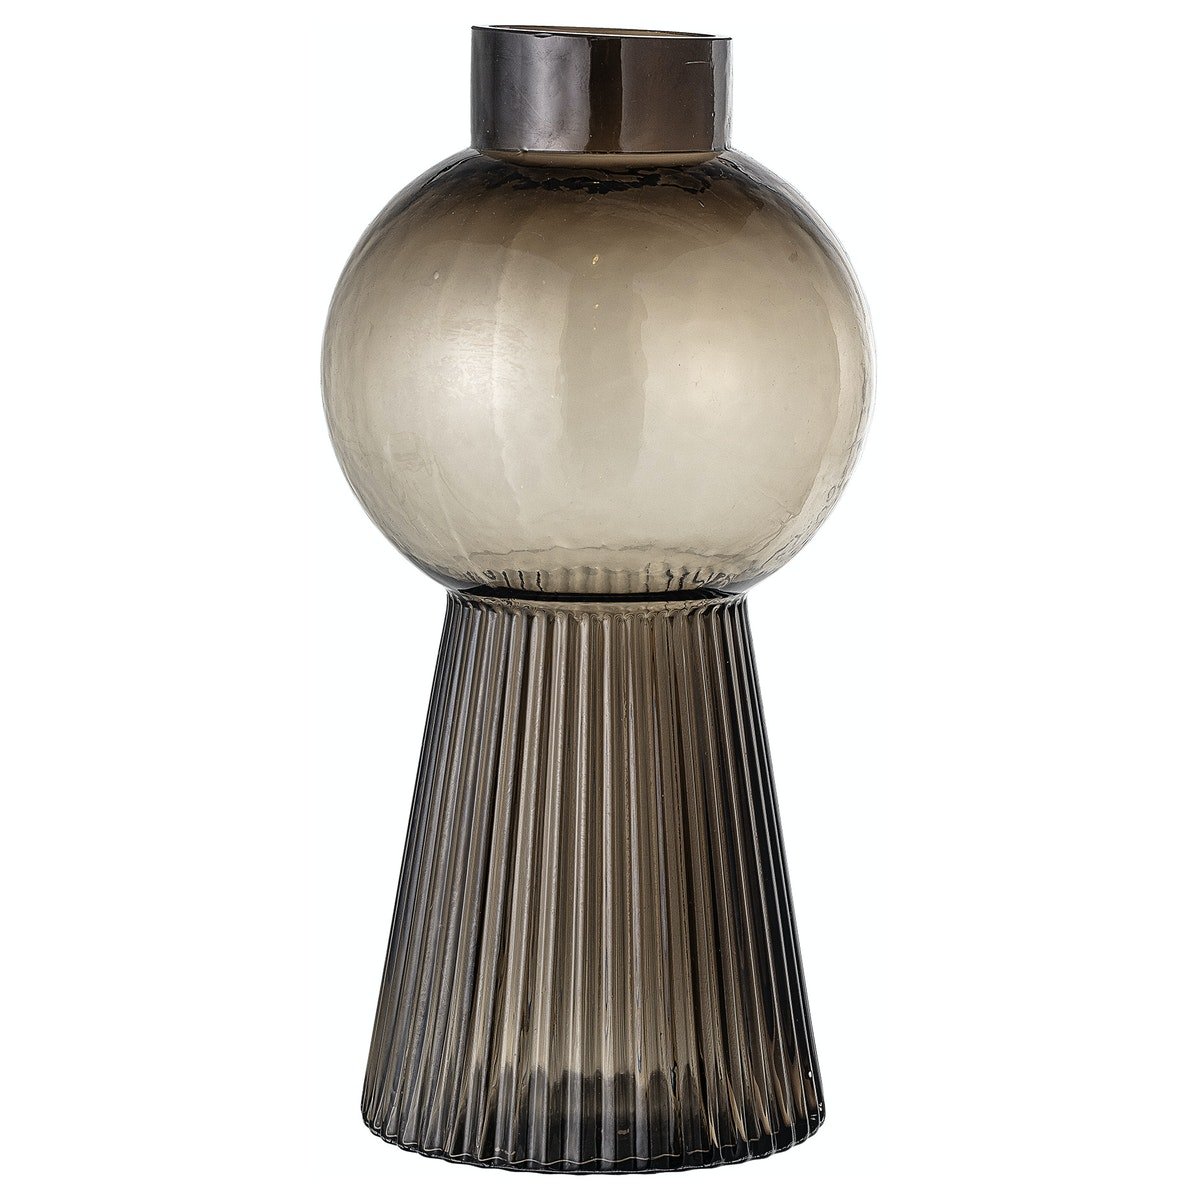 5: Nabaha, Vase, glas by Bloomingville (D: 17 cm. H: 33.5 cm., Brun)